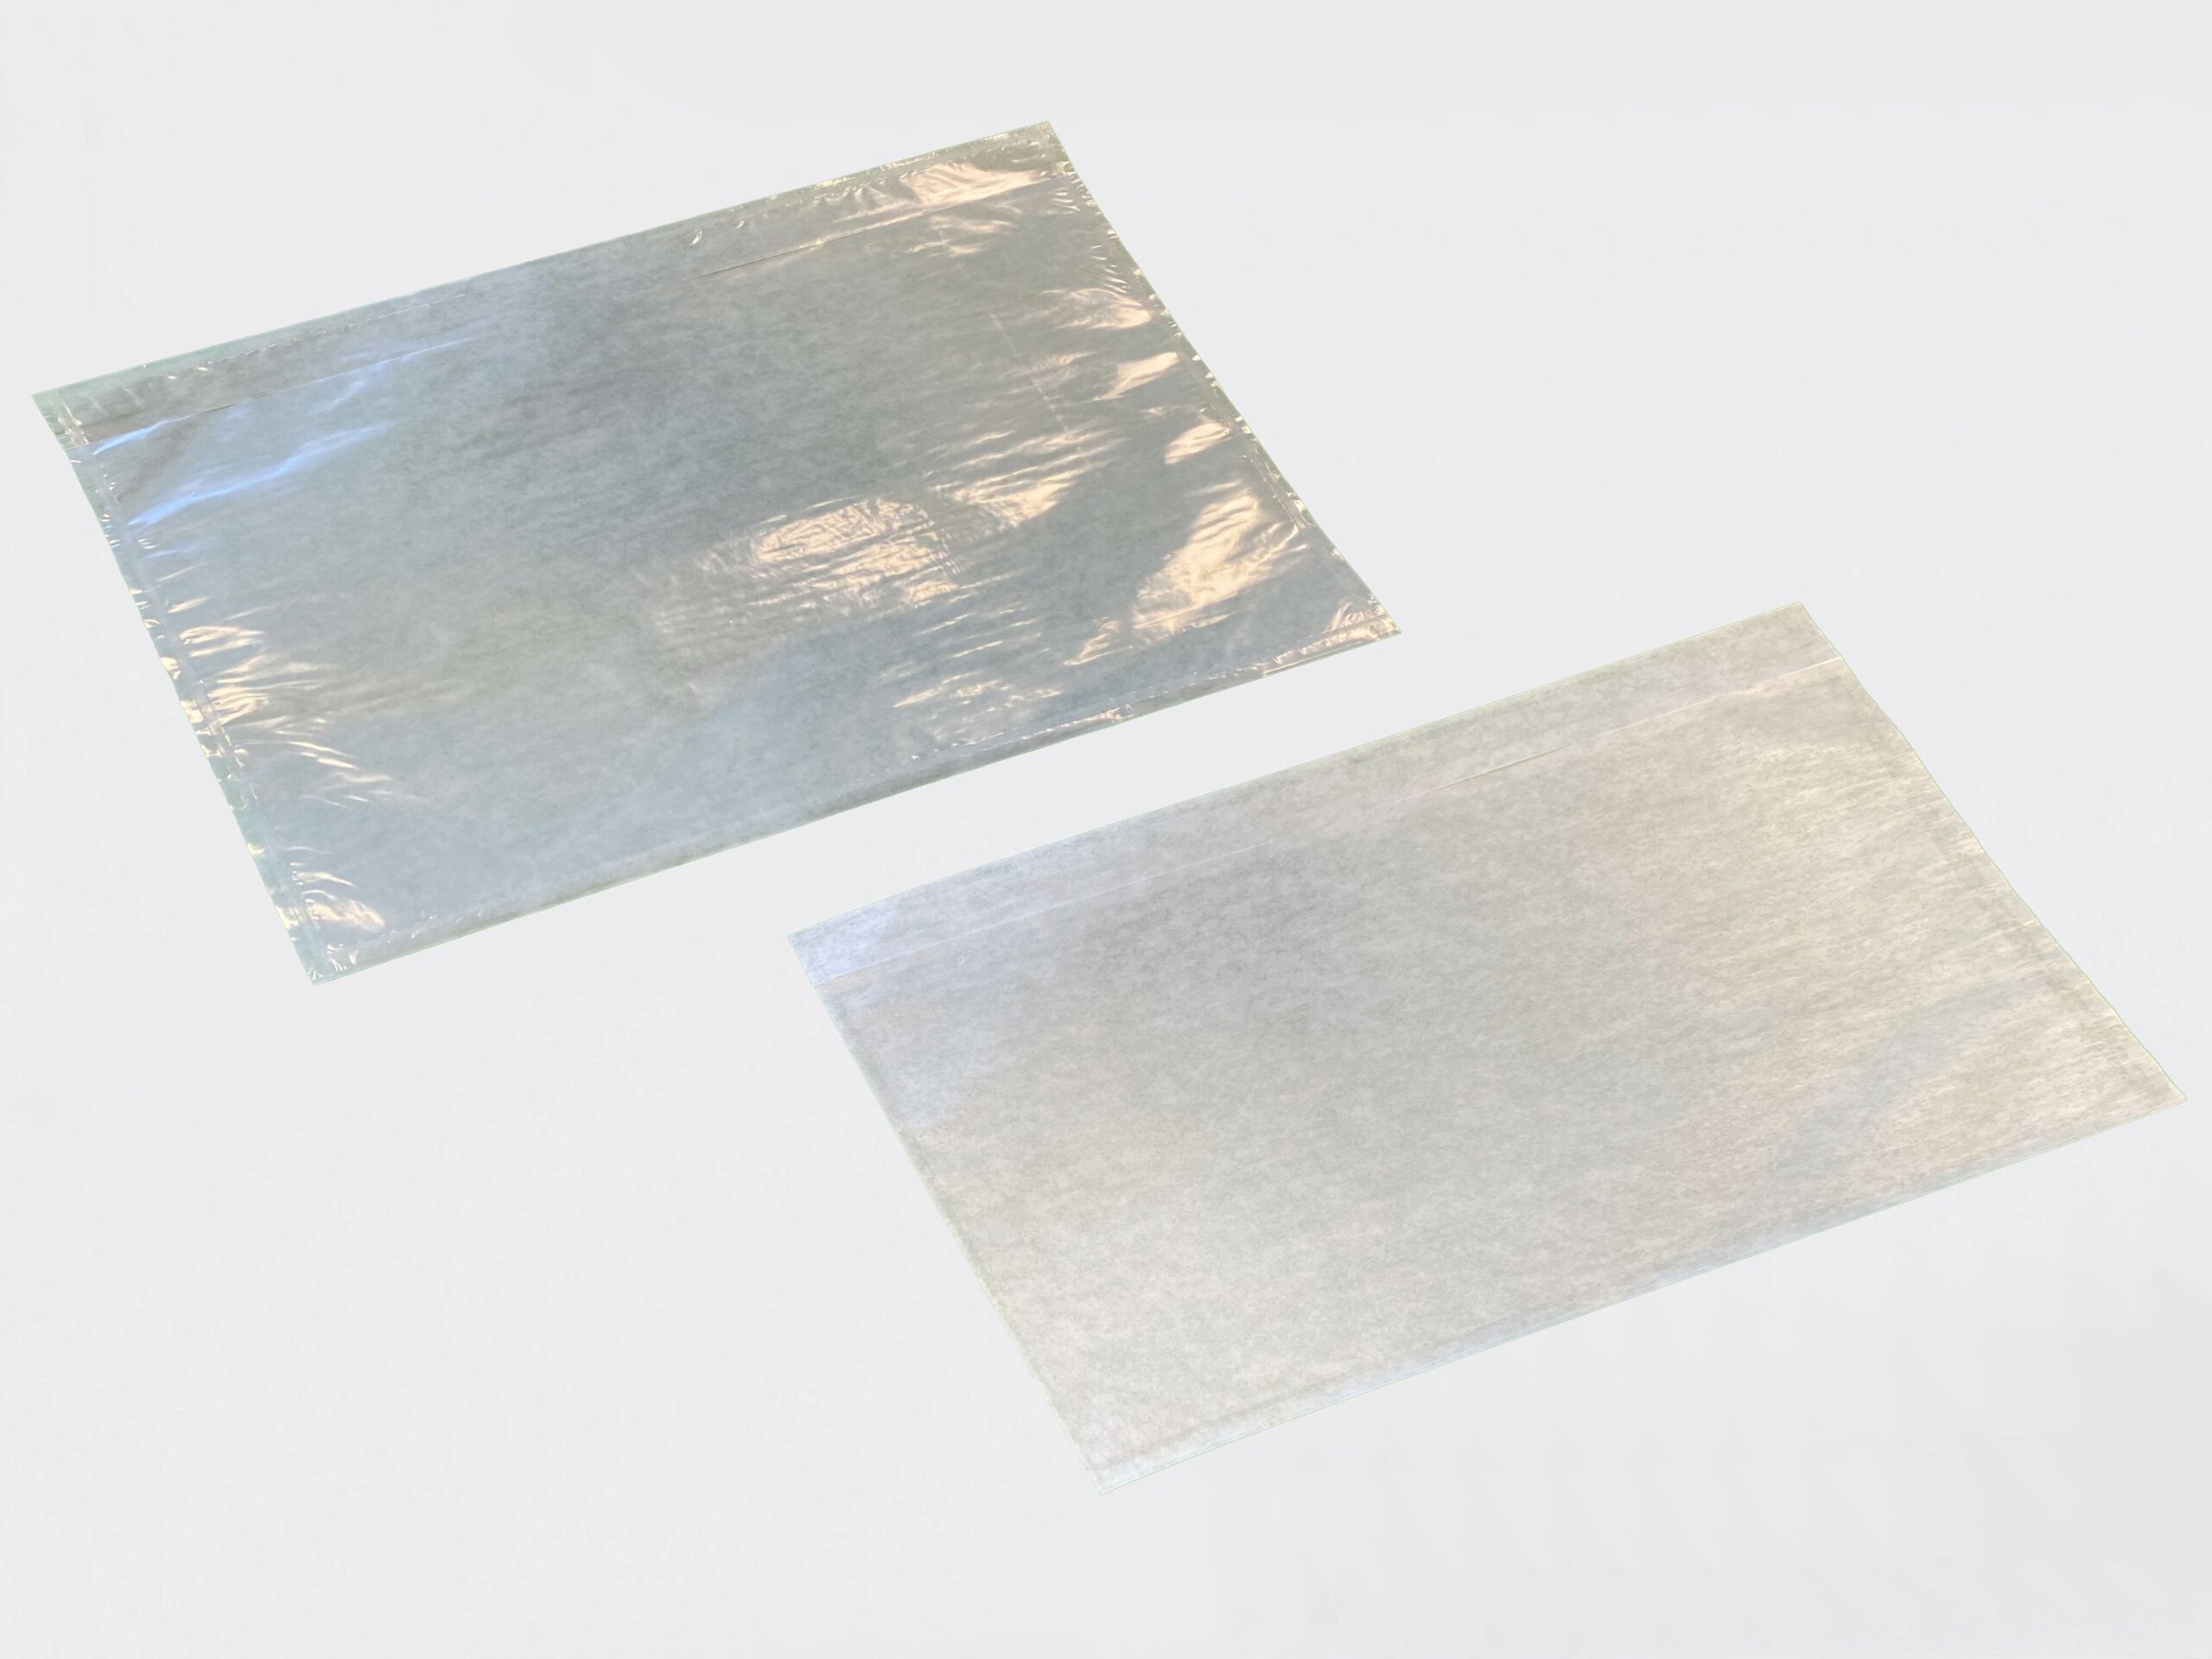 500 Pochettes plastique transparente Suremballage S11 600*400+40 - Harry  plast